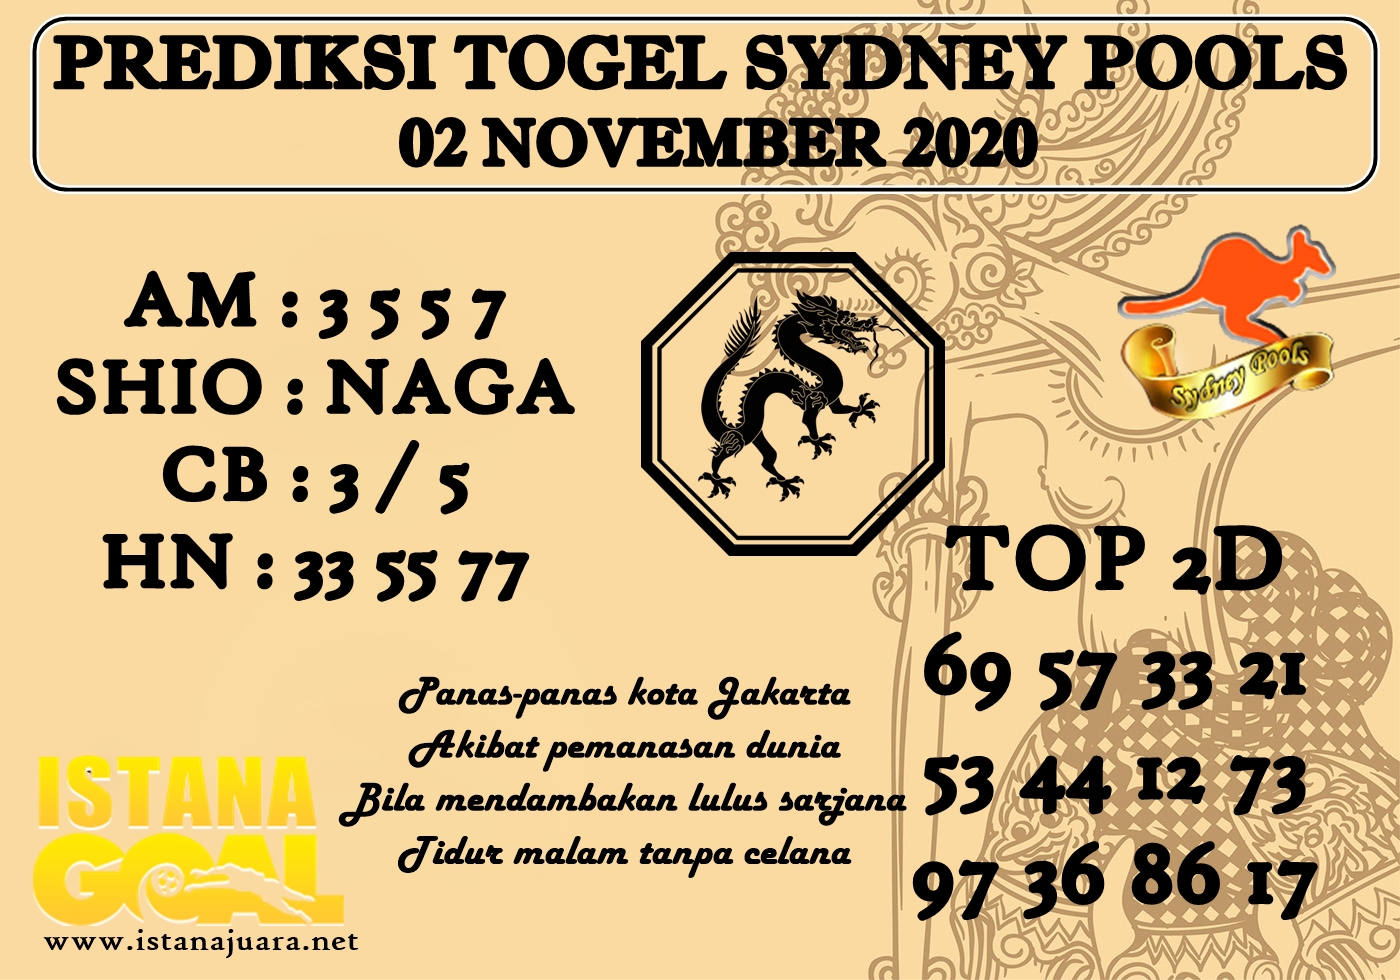 PREDIKSI TOGEL SYDNEY POOLS 02 NOVEMBER 2020